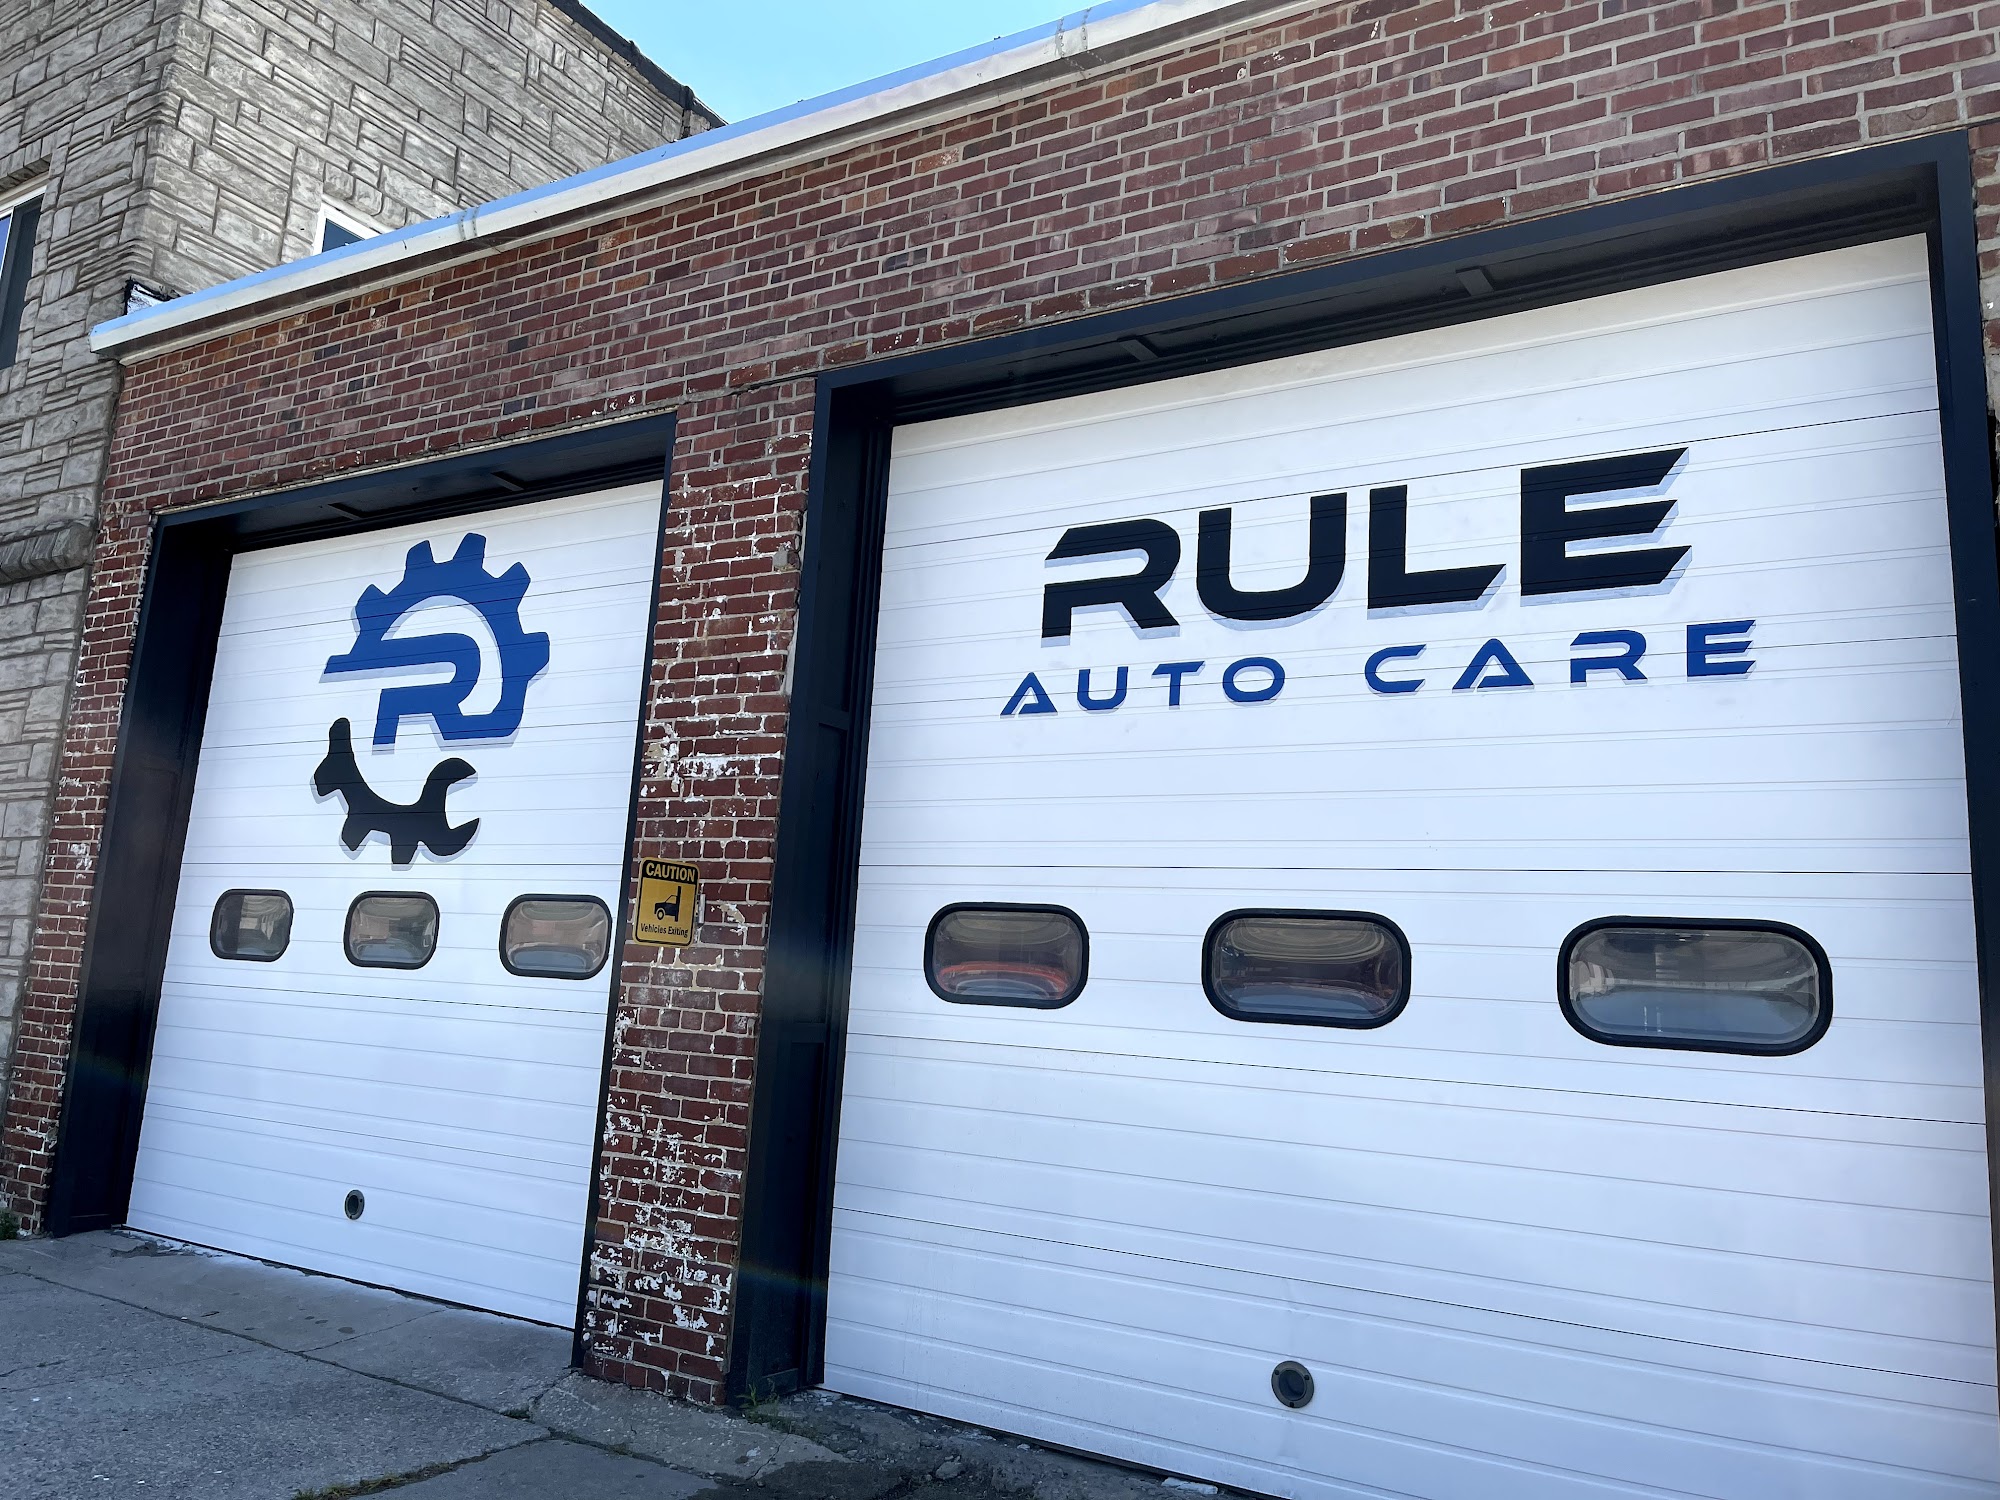 Rule Auto Care 105 E Washington St, Rensselaer Indiana 47978